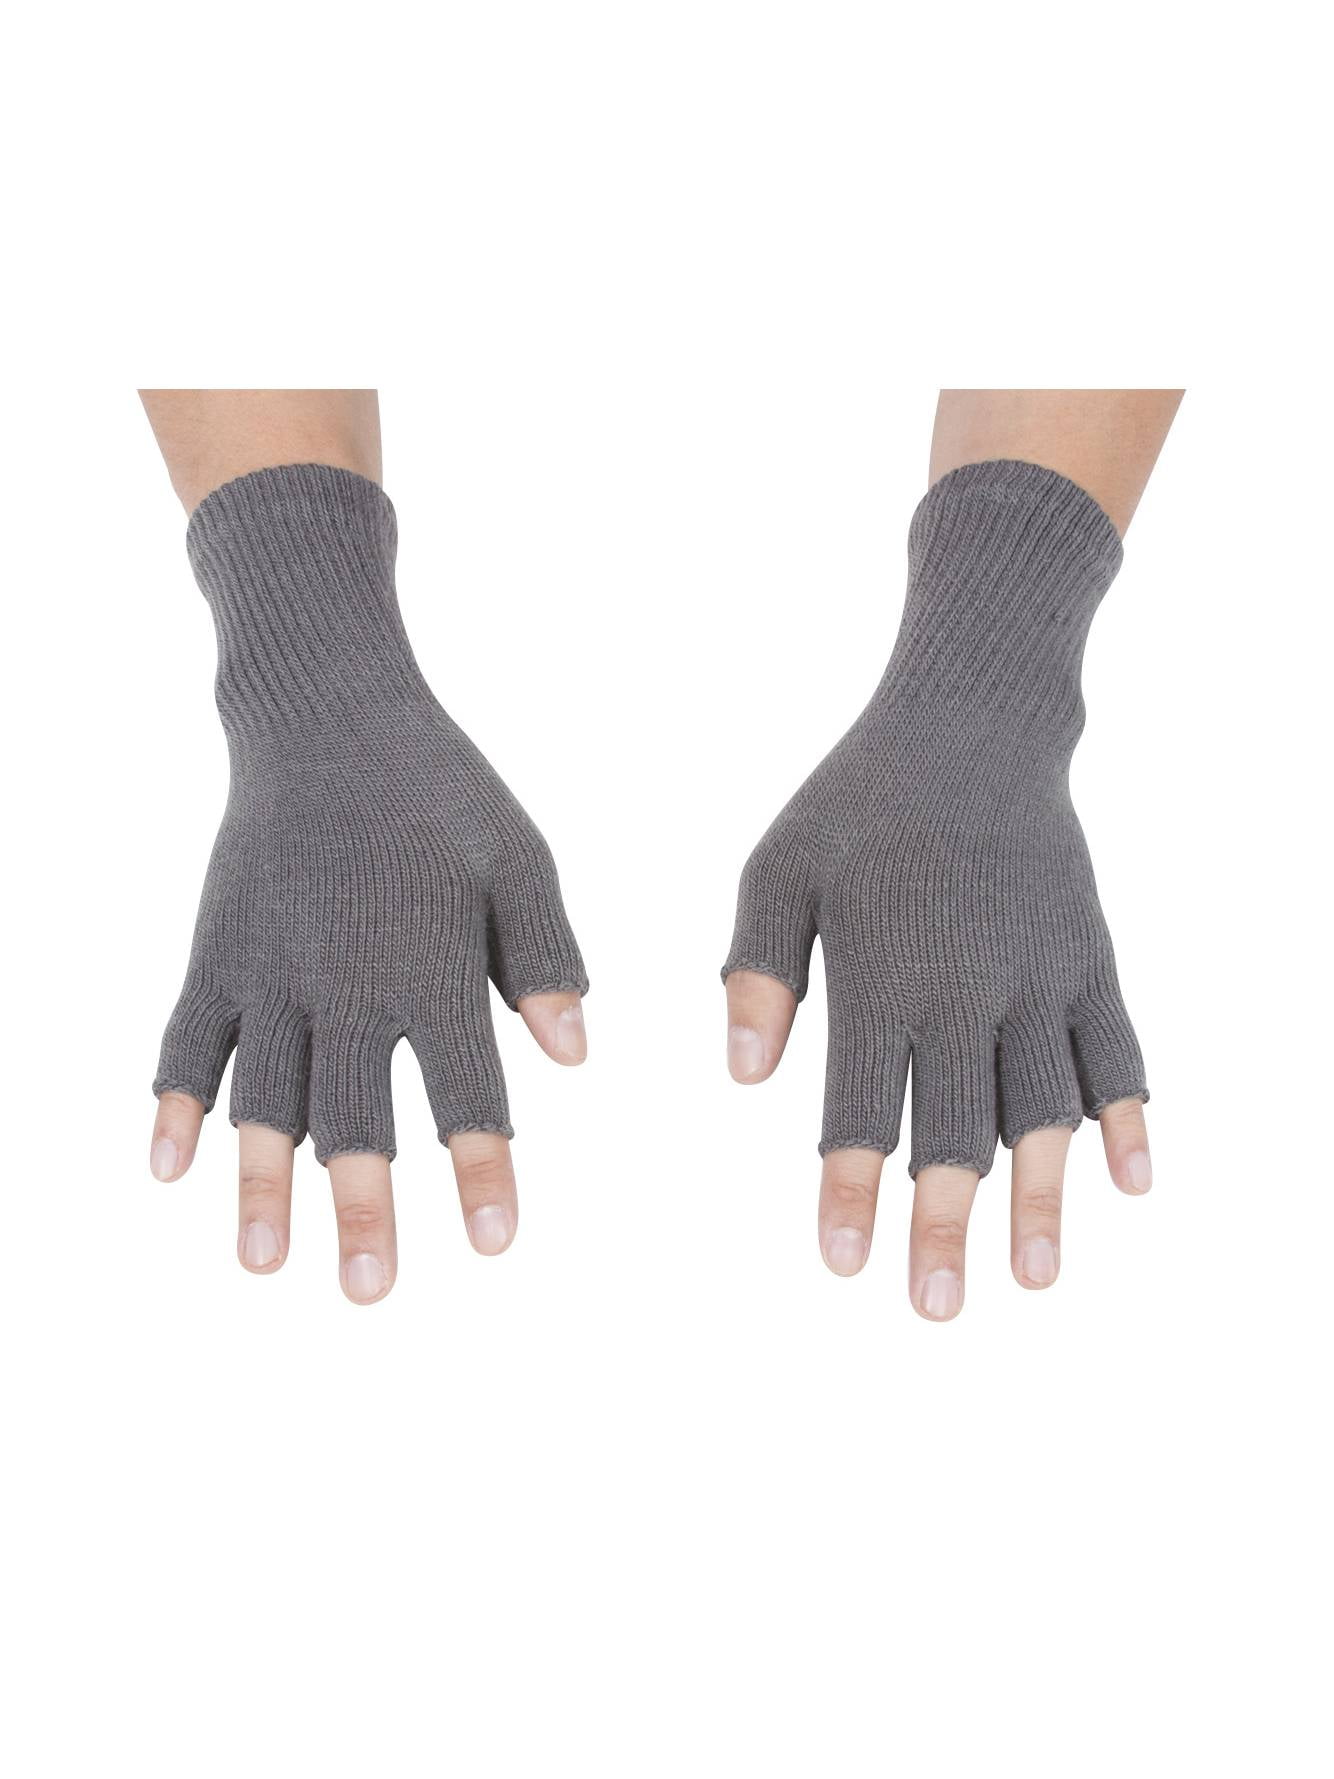 Gravity Threads Unisex Warm Half Finger Stretchy Knit Fingerless Gloves,  Navy Blue